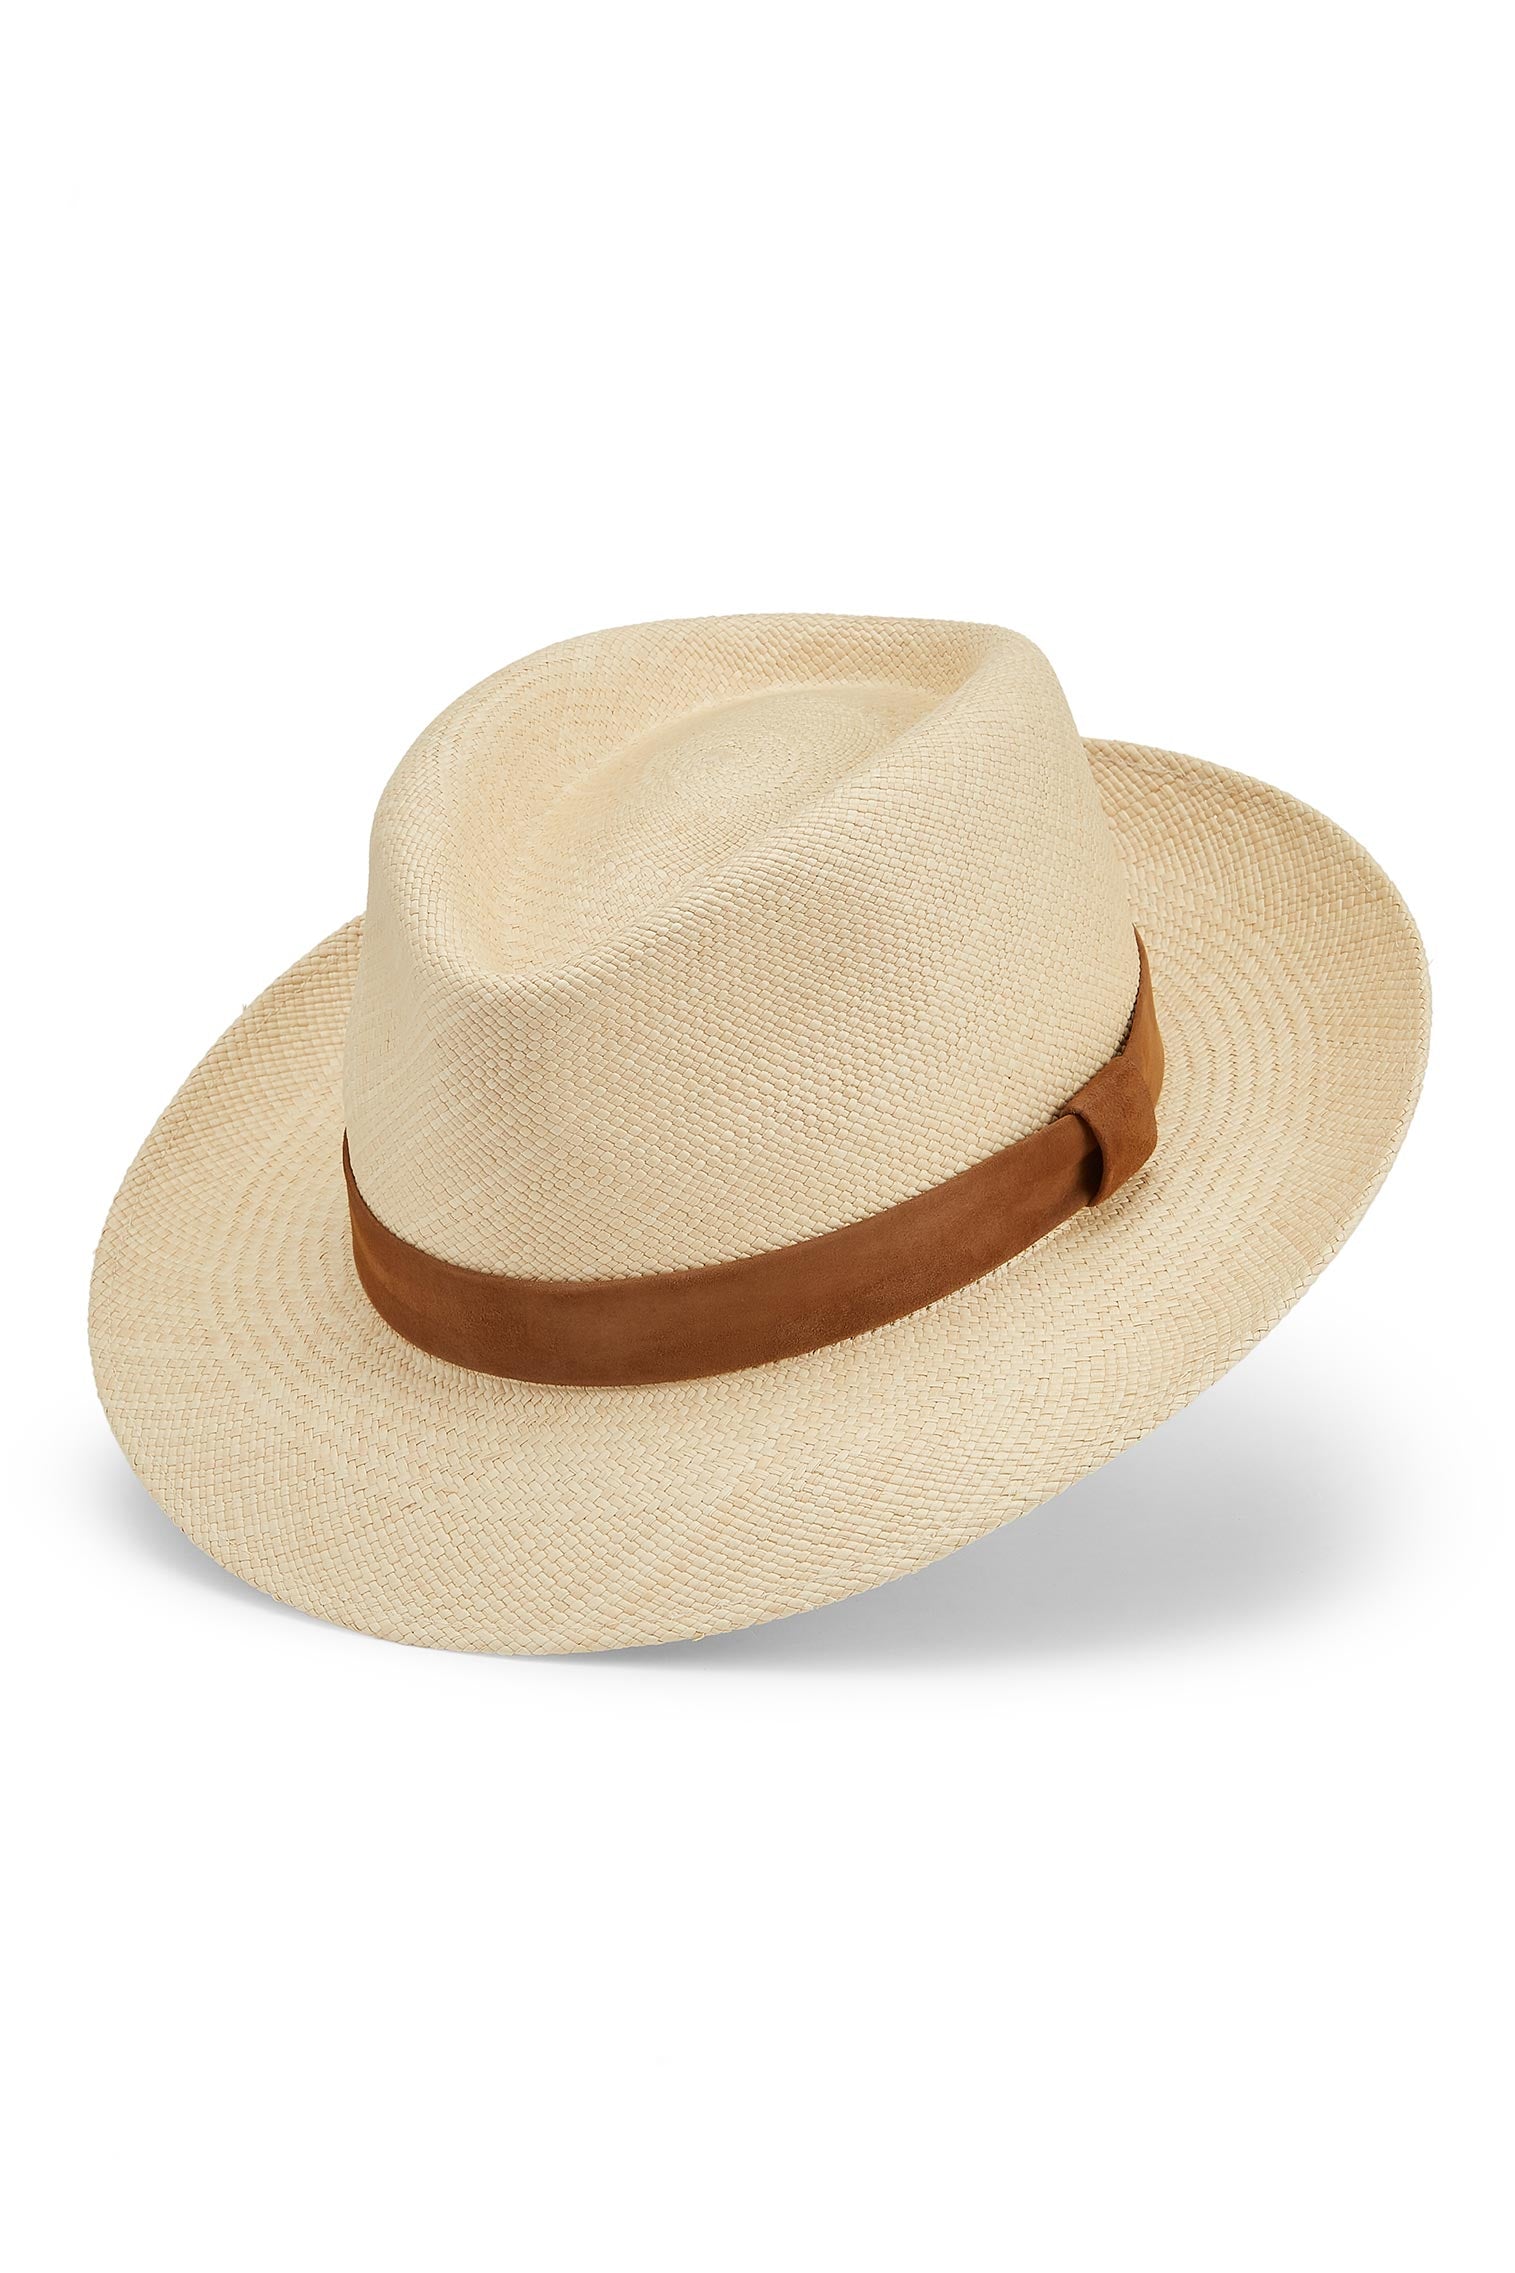 Santa Barbara Panama - Sun Hats & Boaters - Lock & Co. Hatters London UK